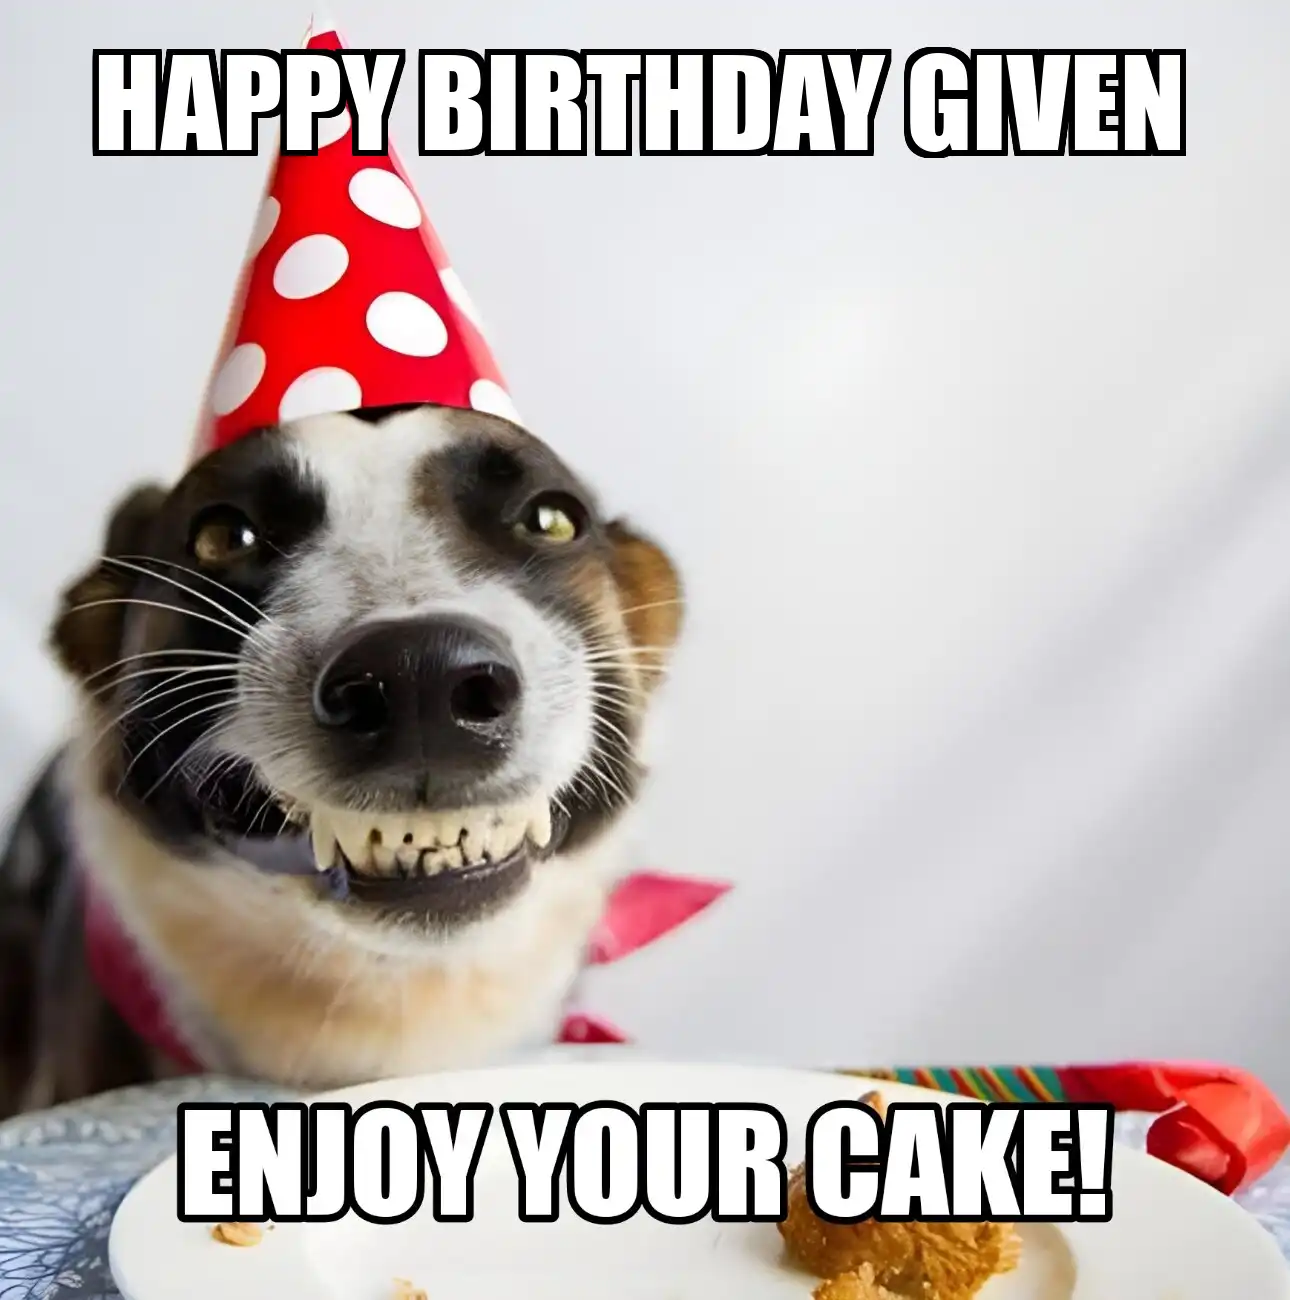 Happy Birthday Given Enjoy Your Cake Dog Meme